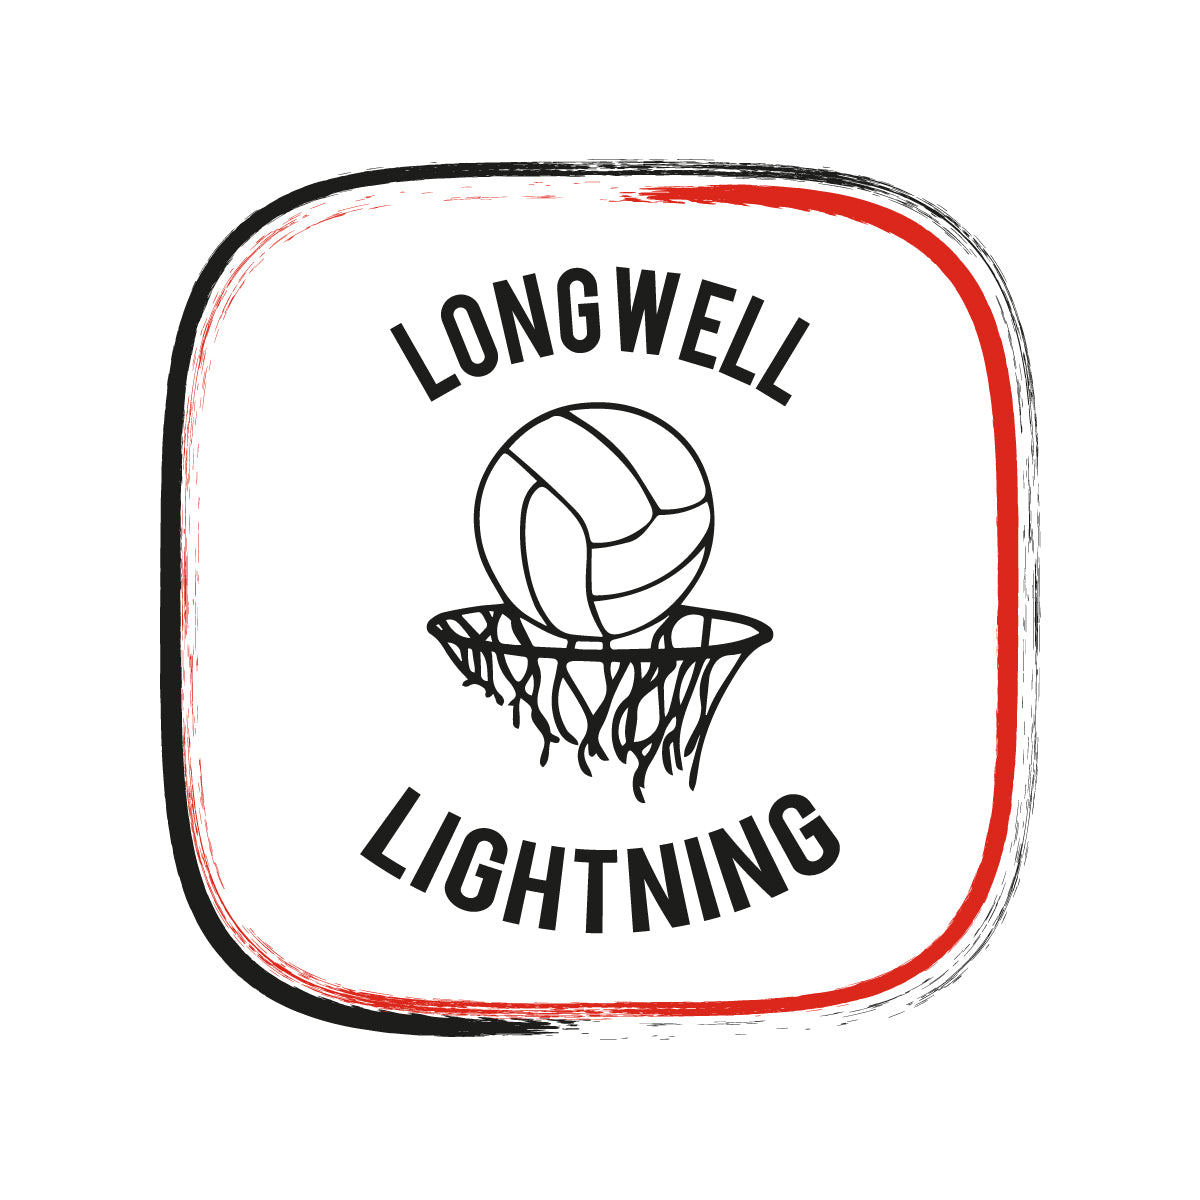 Longwell Lightning